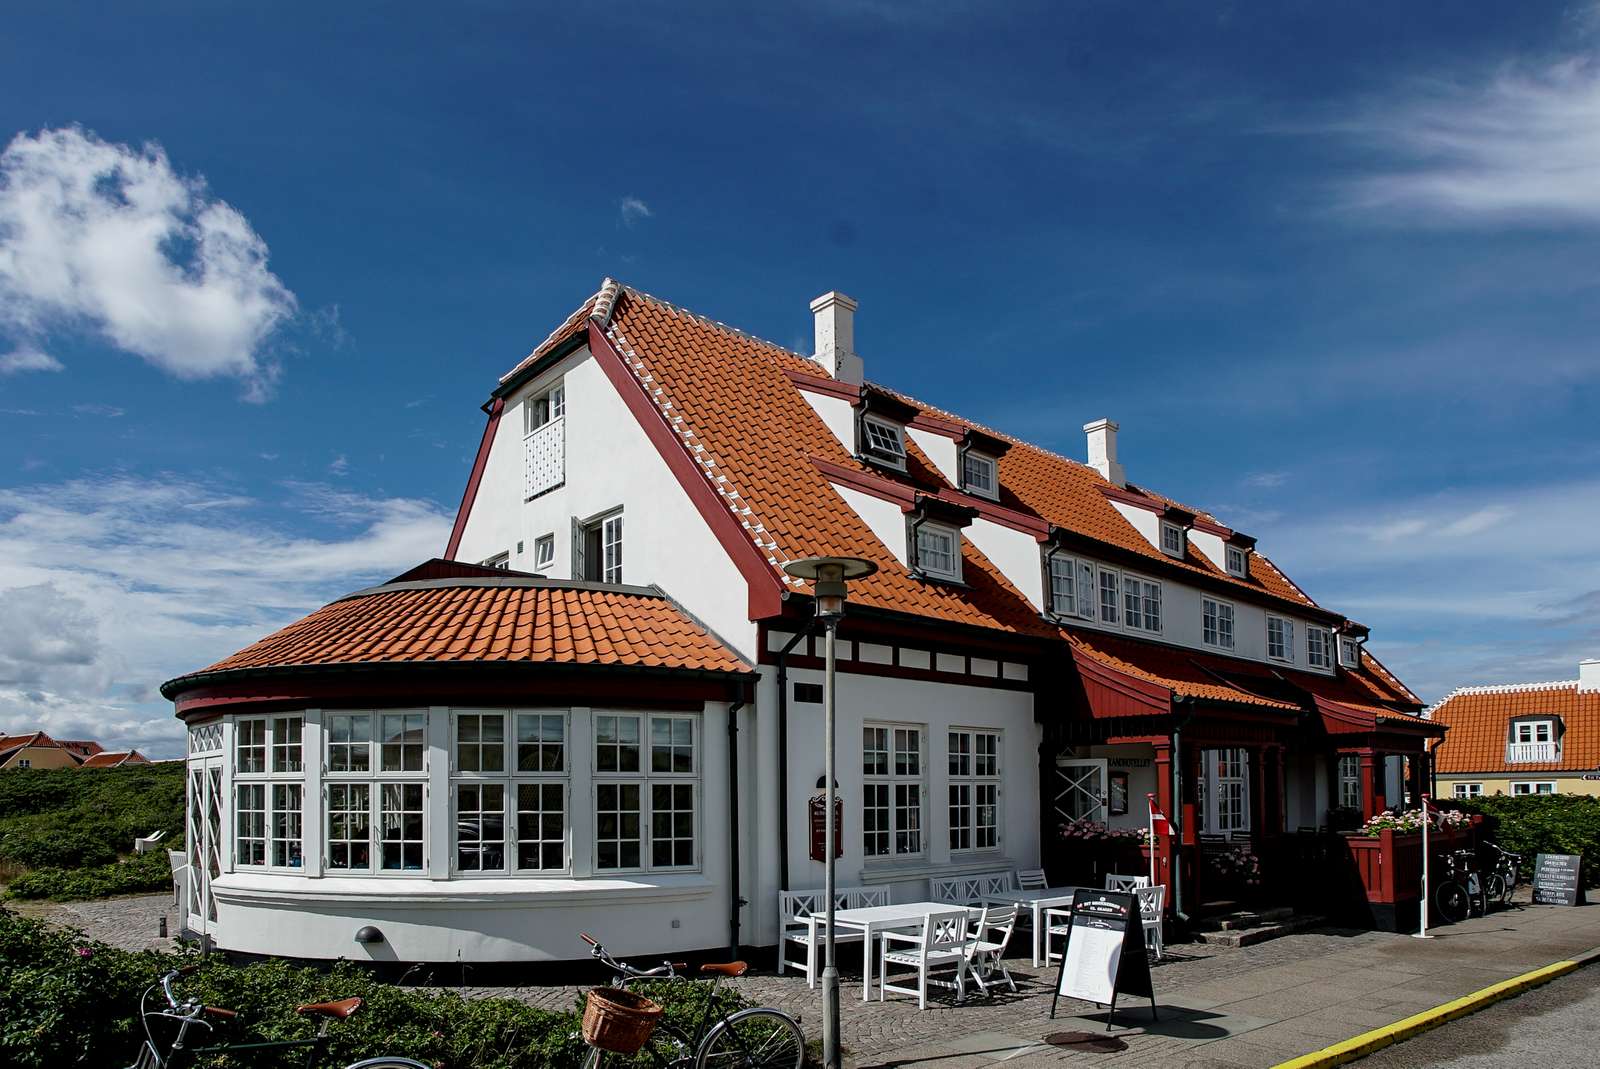 Strand Hotellet i Gammel Skagen